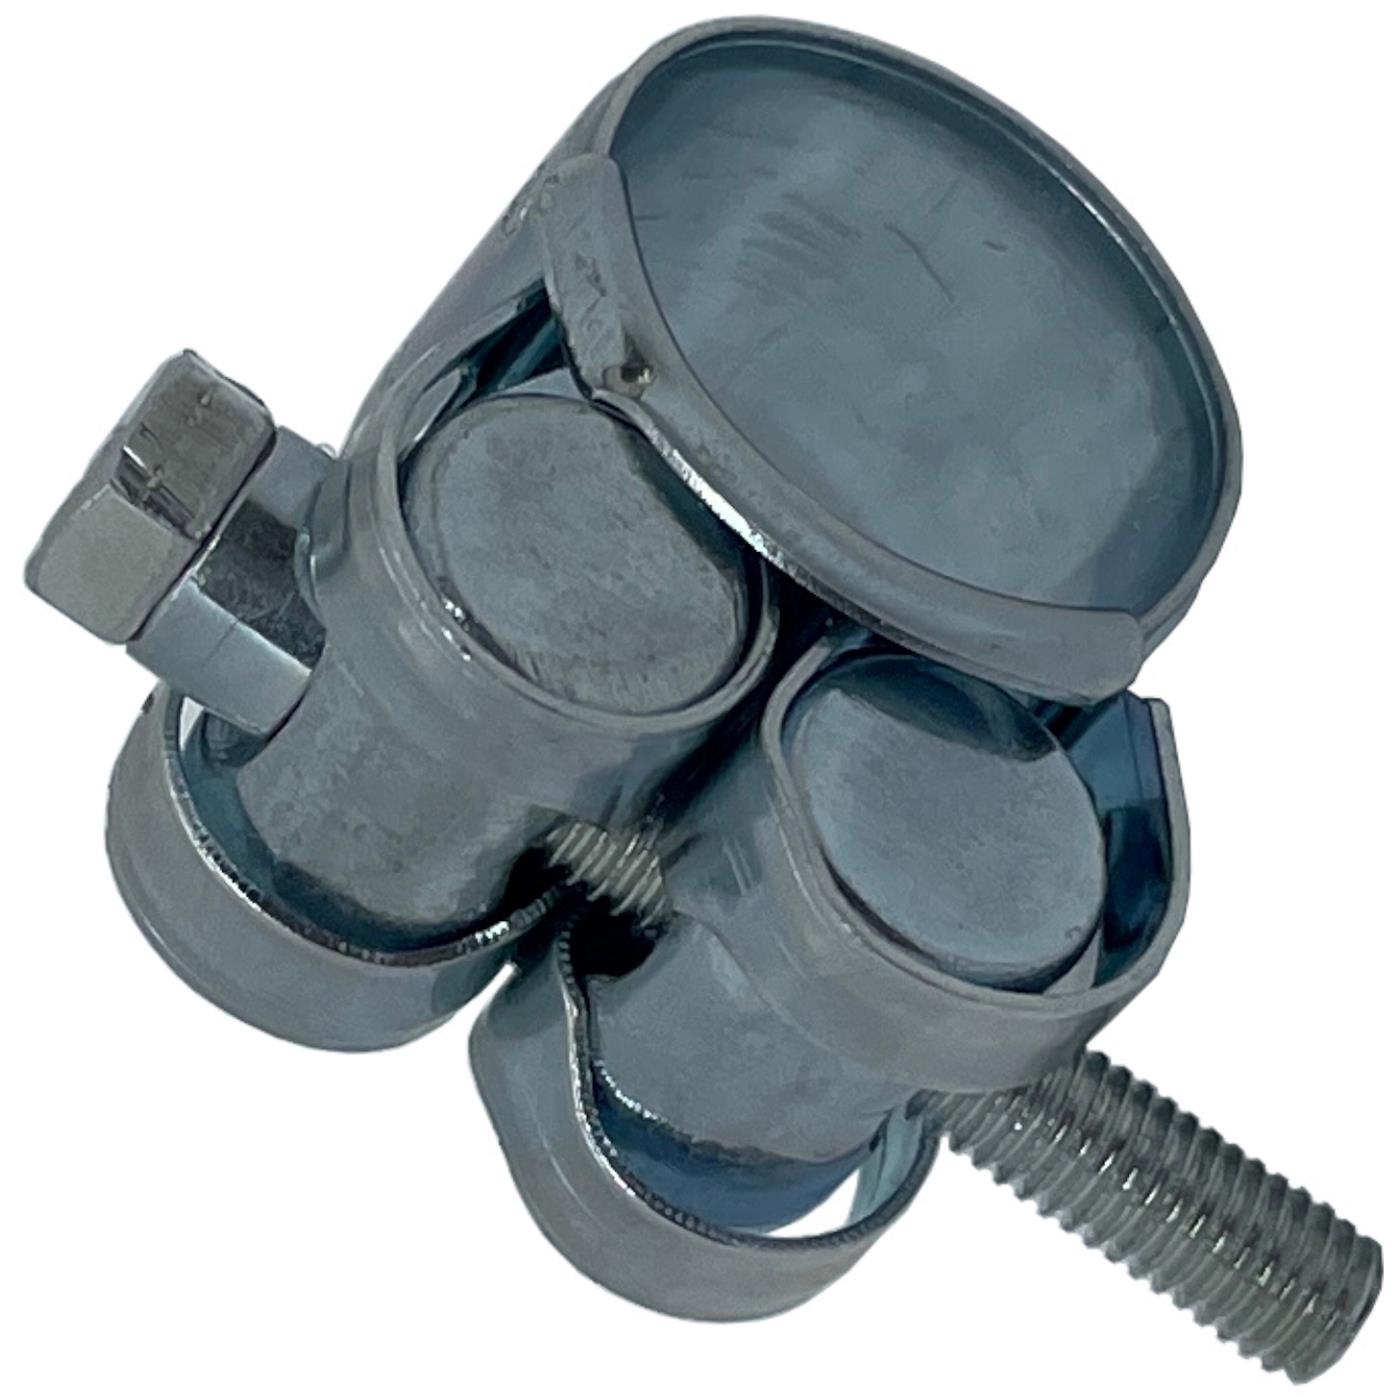 1x Lumonic Hinge pin clamp 20-22mm Galvanised Exhaust clamp for construction cars trucks